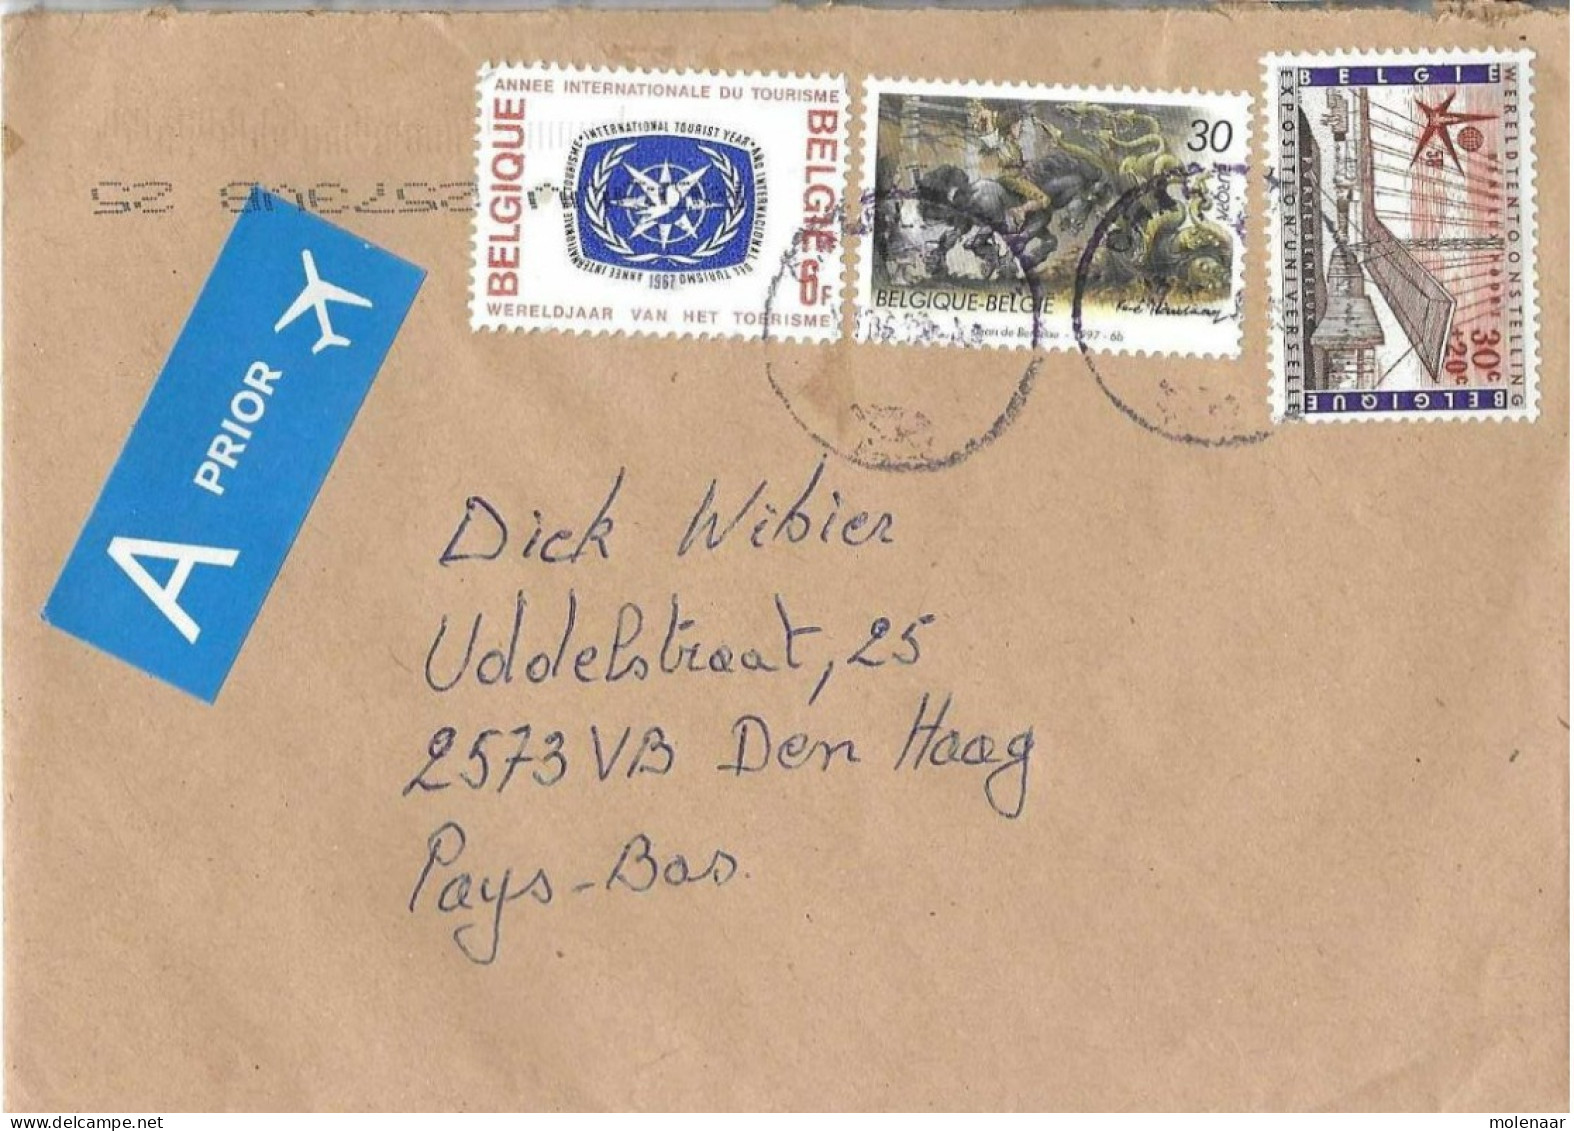 Postzegels > Europa > België > 1951-... > 1971-1980 > Brief Met 3 Postzegels (17020) - Briefe U. Dokumente